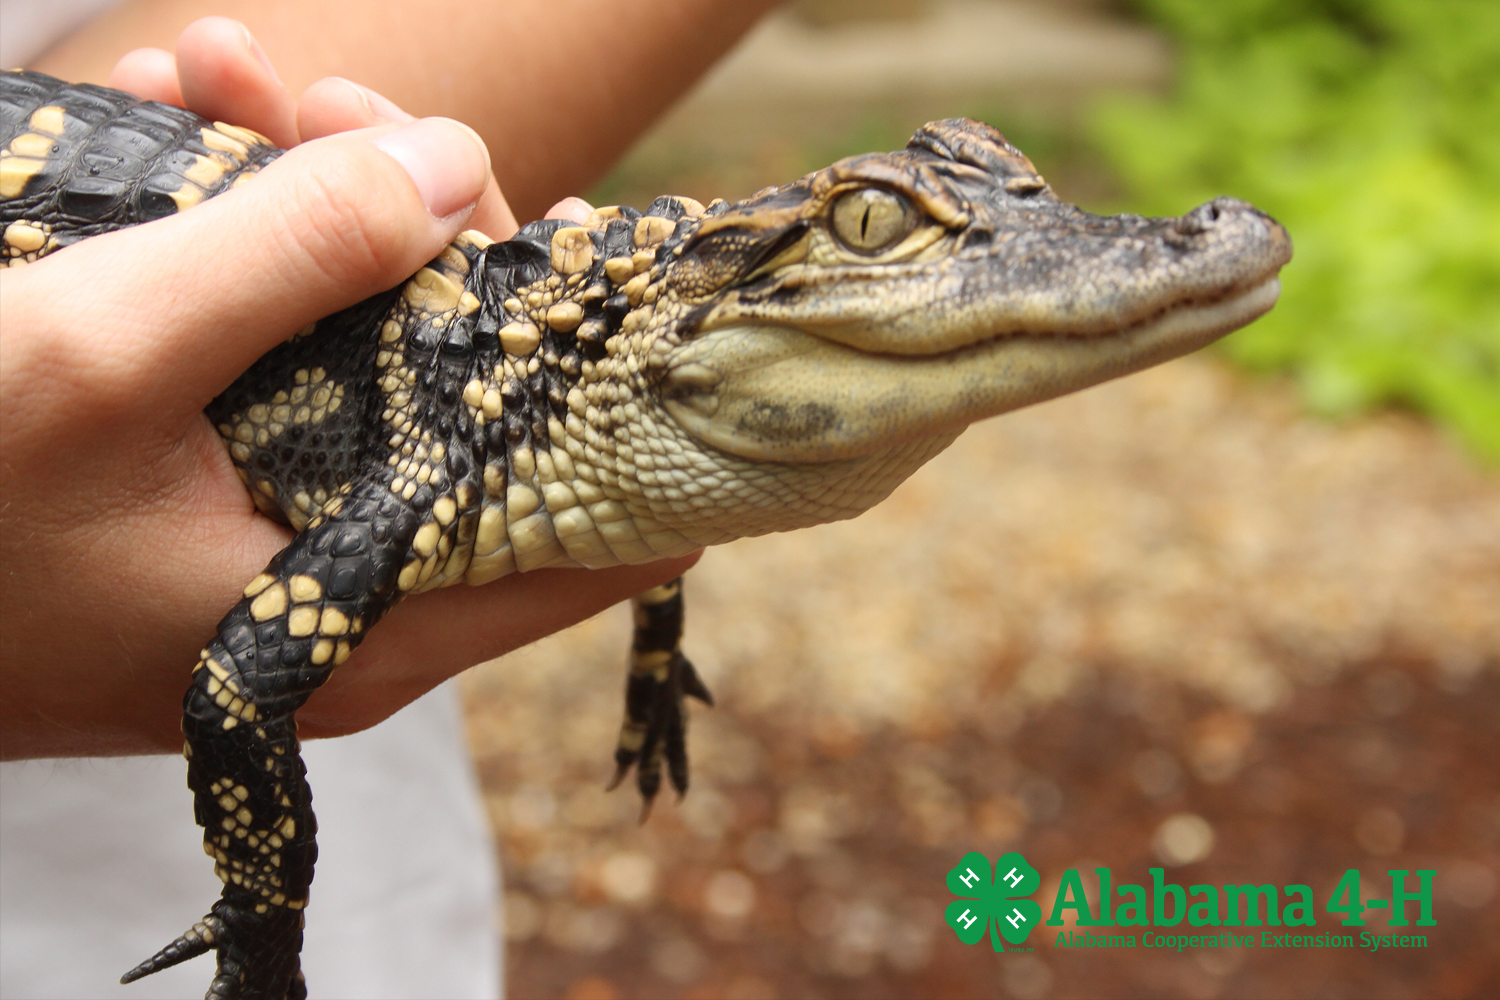 Alabama 4-H Science School Herp Journey program; image of alligator